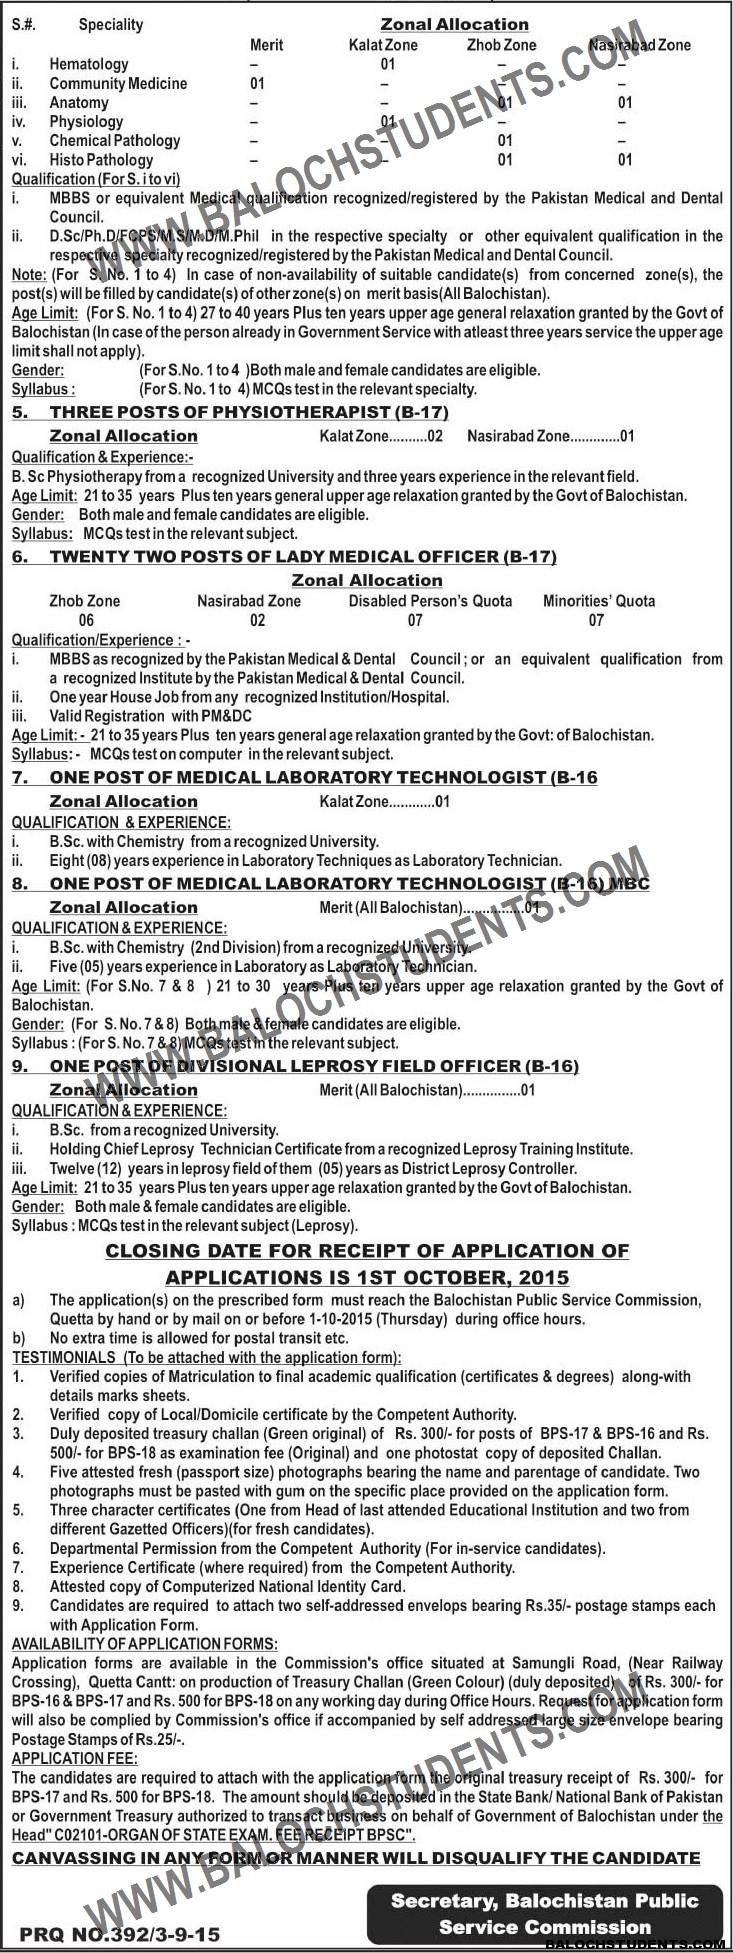 Jobs Opportunities- Balochistan Public Service Commission- Advertisement No. 132015 (2)